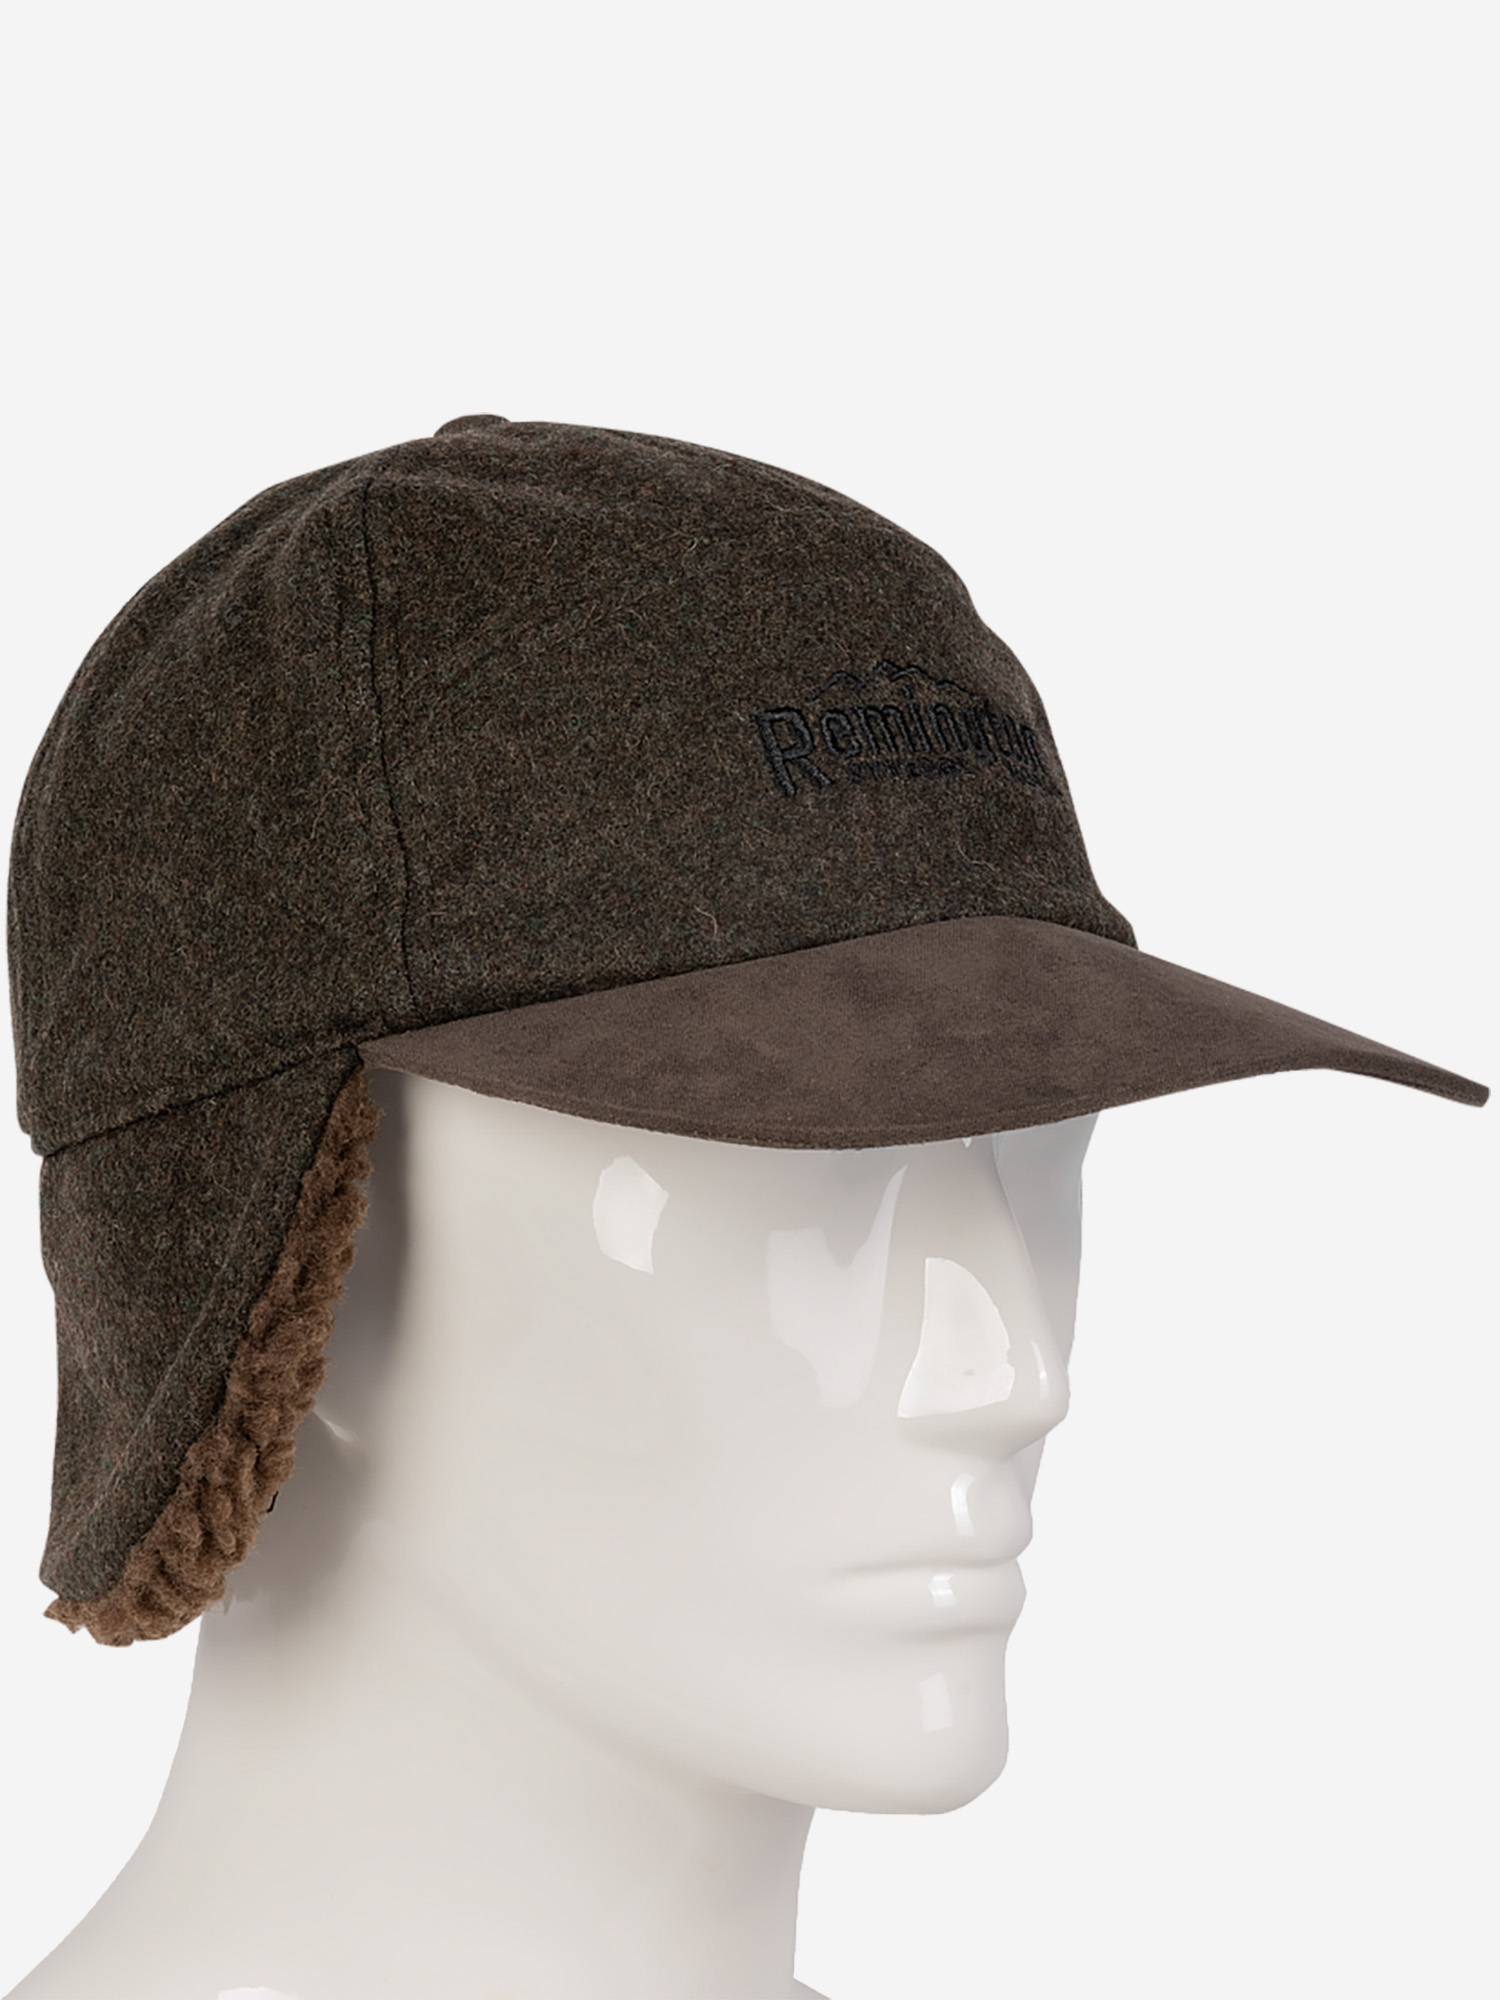 Шапка Remington Еarflaps baseball cap brown, Коричневый шапка ушанка remington north ice brown коричневый